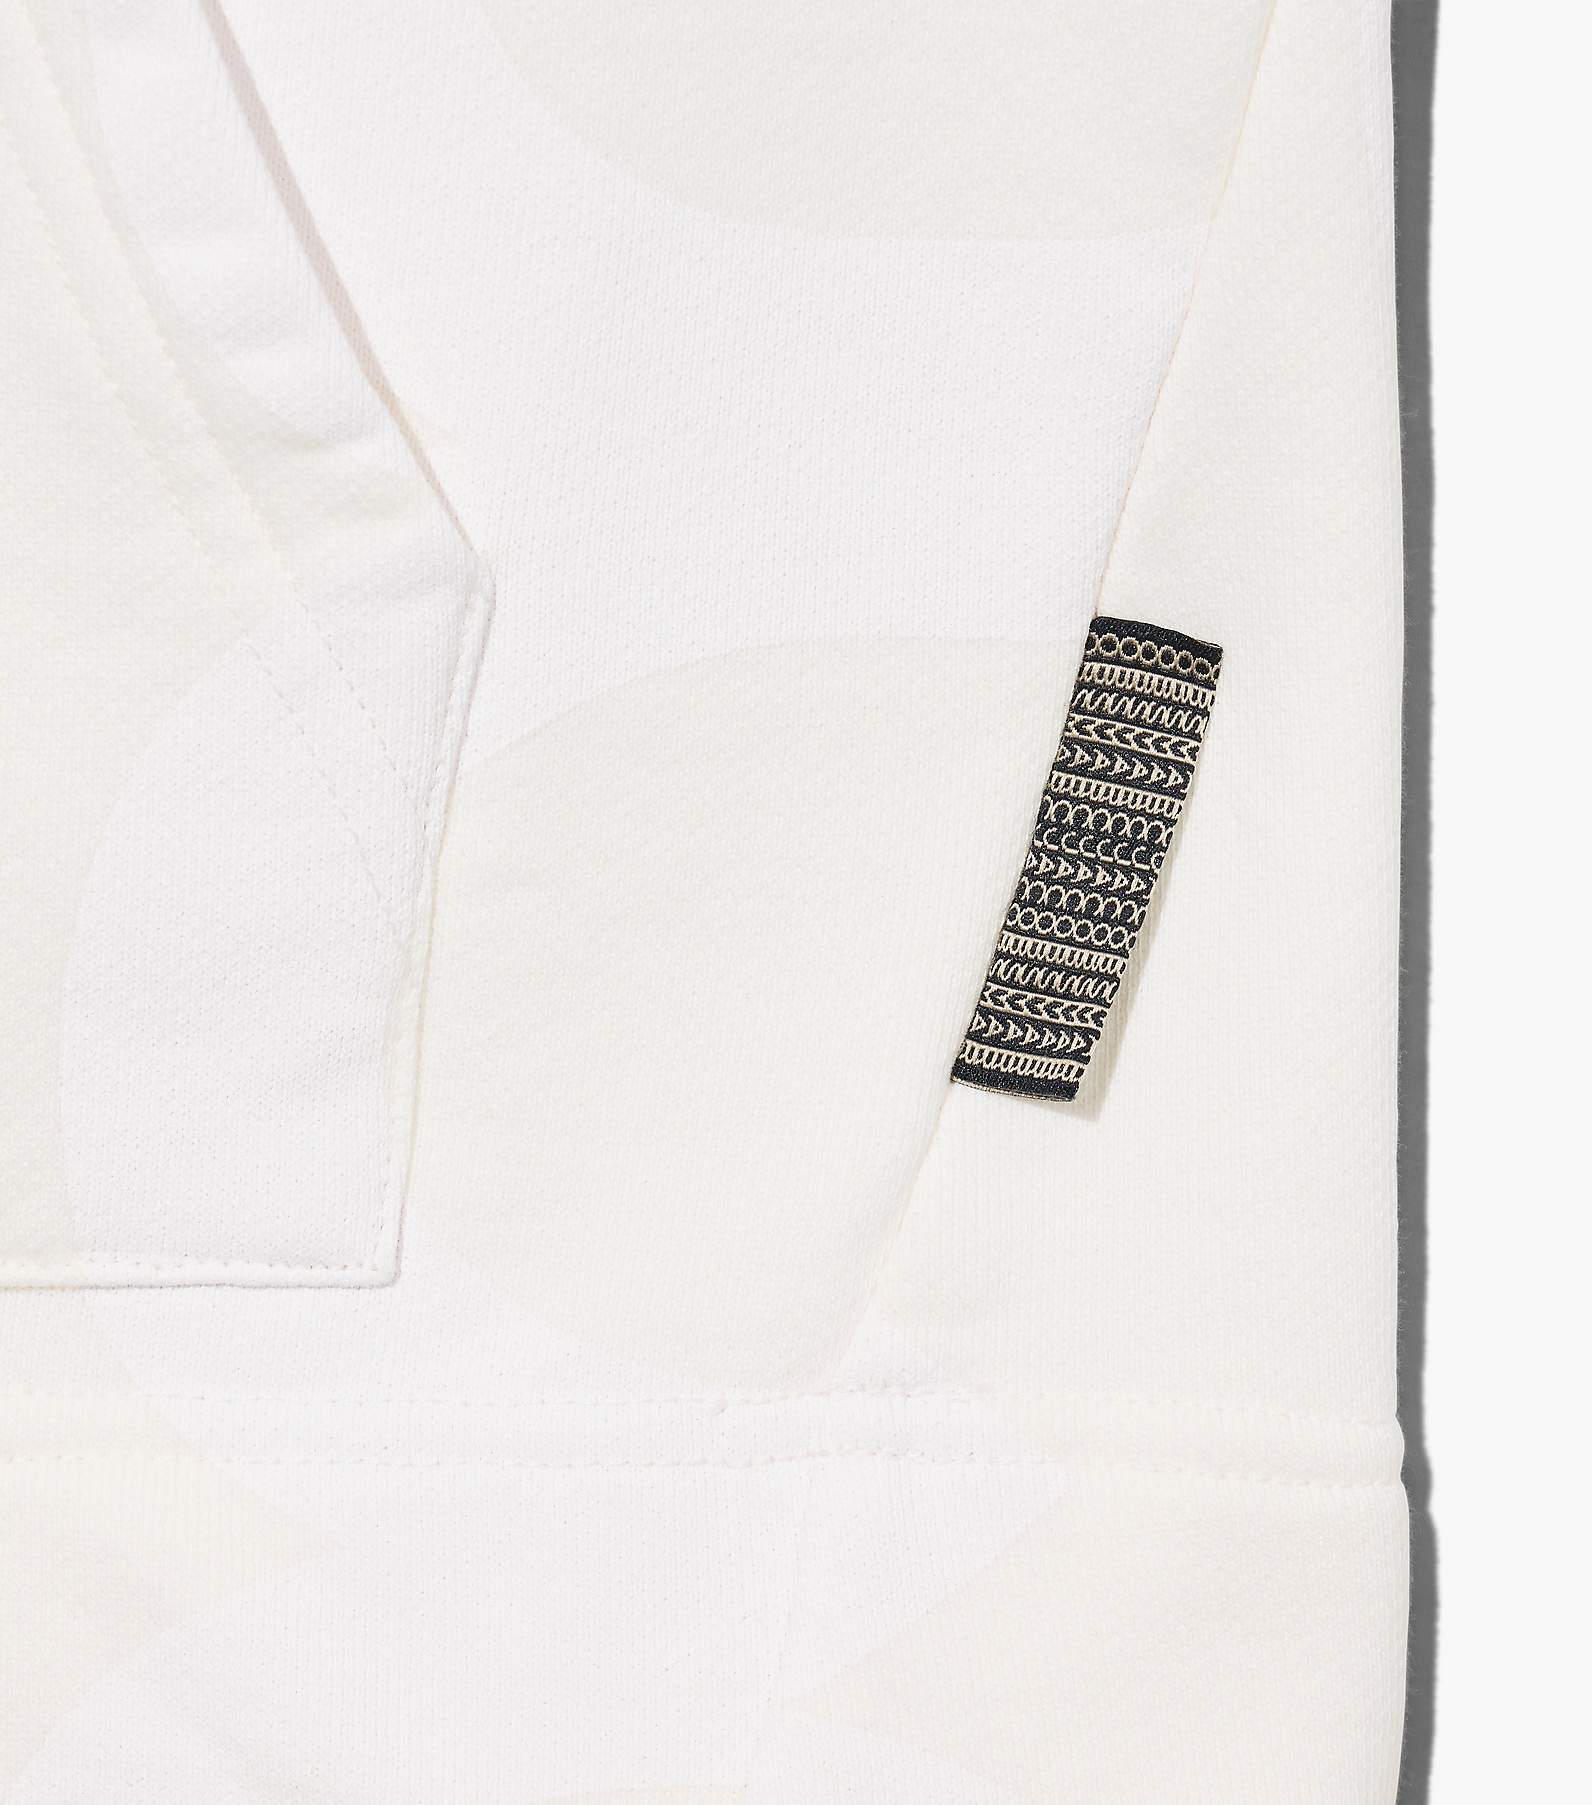 Marc Jacobs The Monogram Zip Hoodie in Gunmetal/Apple, Size XS/Small